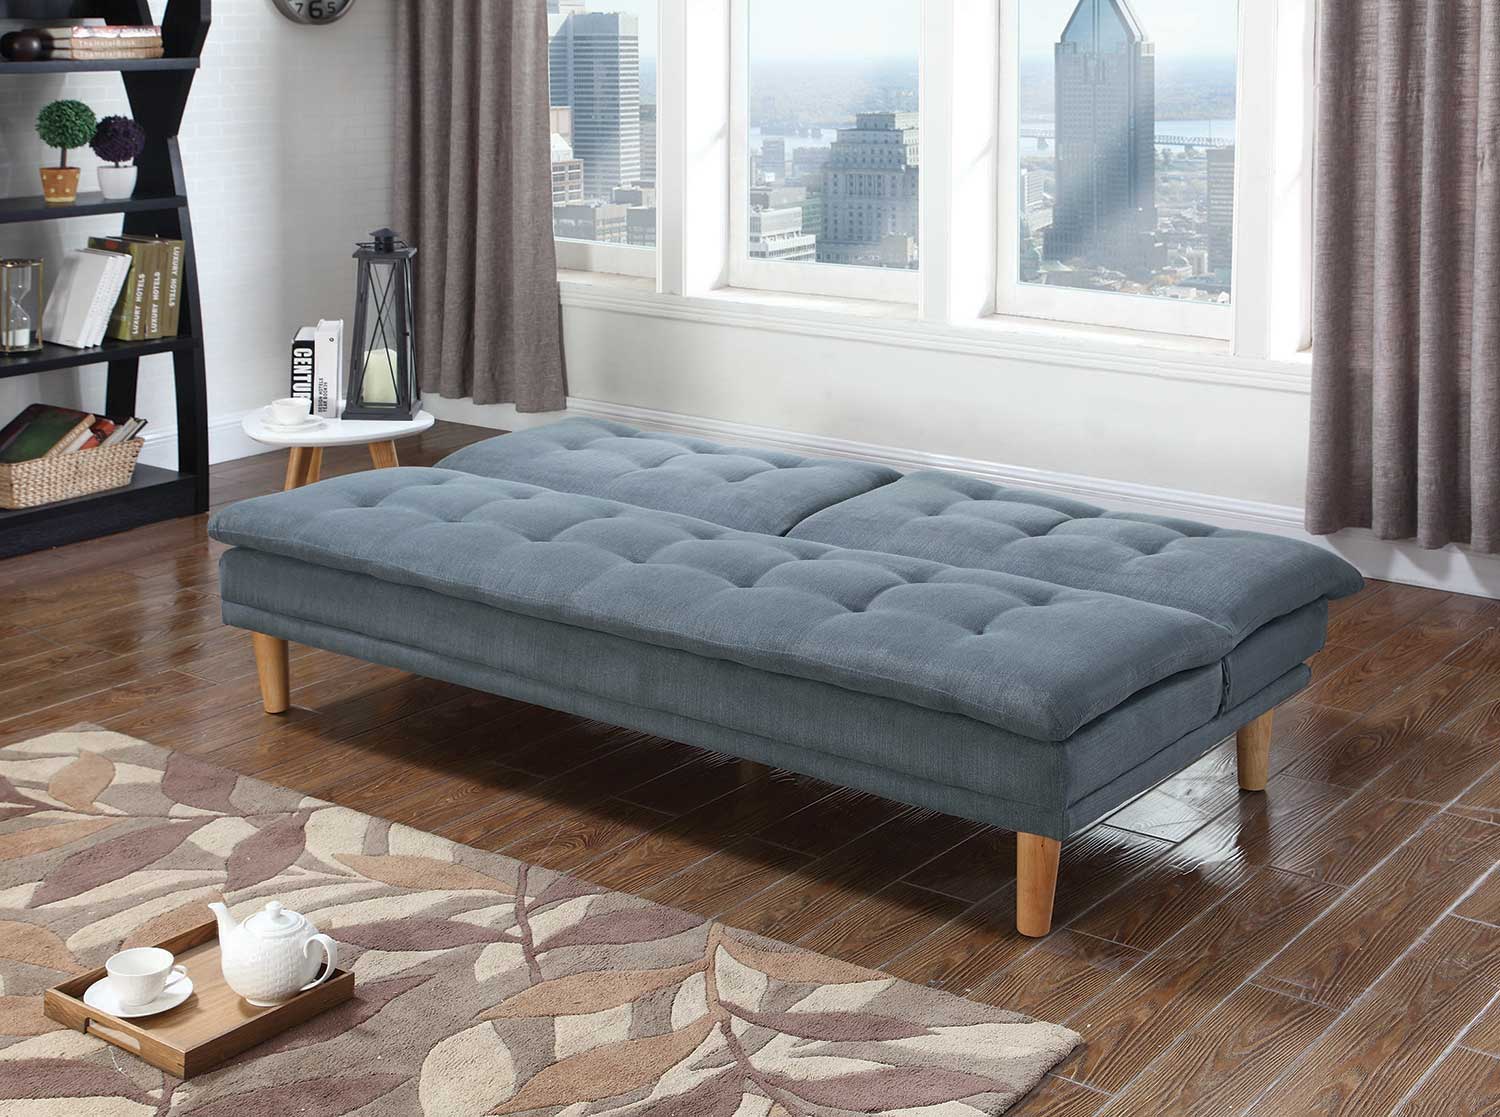 Coaster 503956 Sofa Bed - Grey